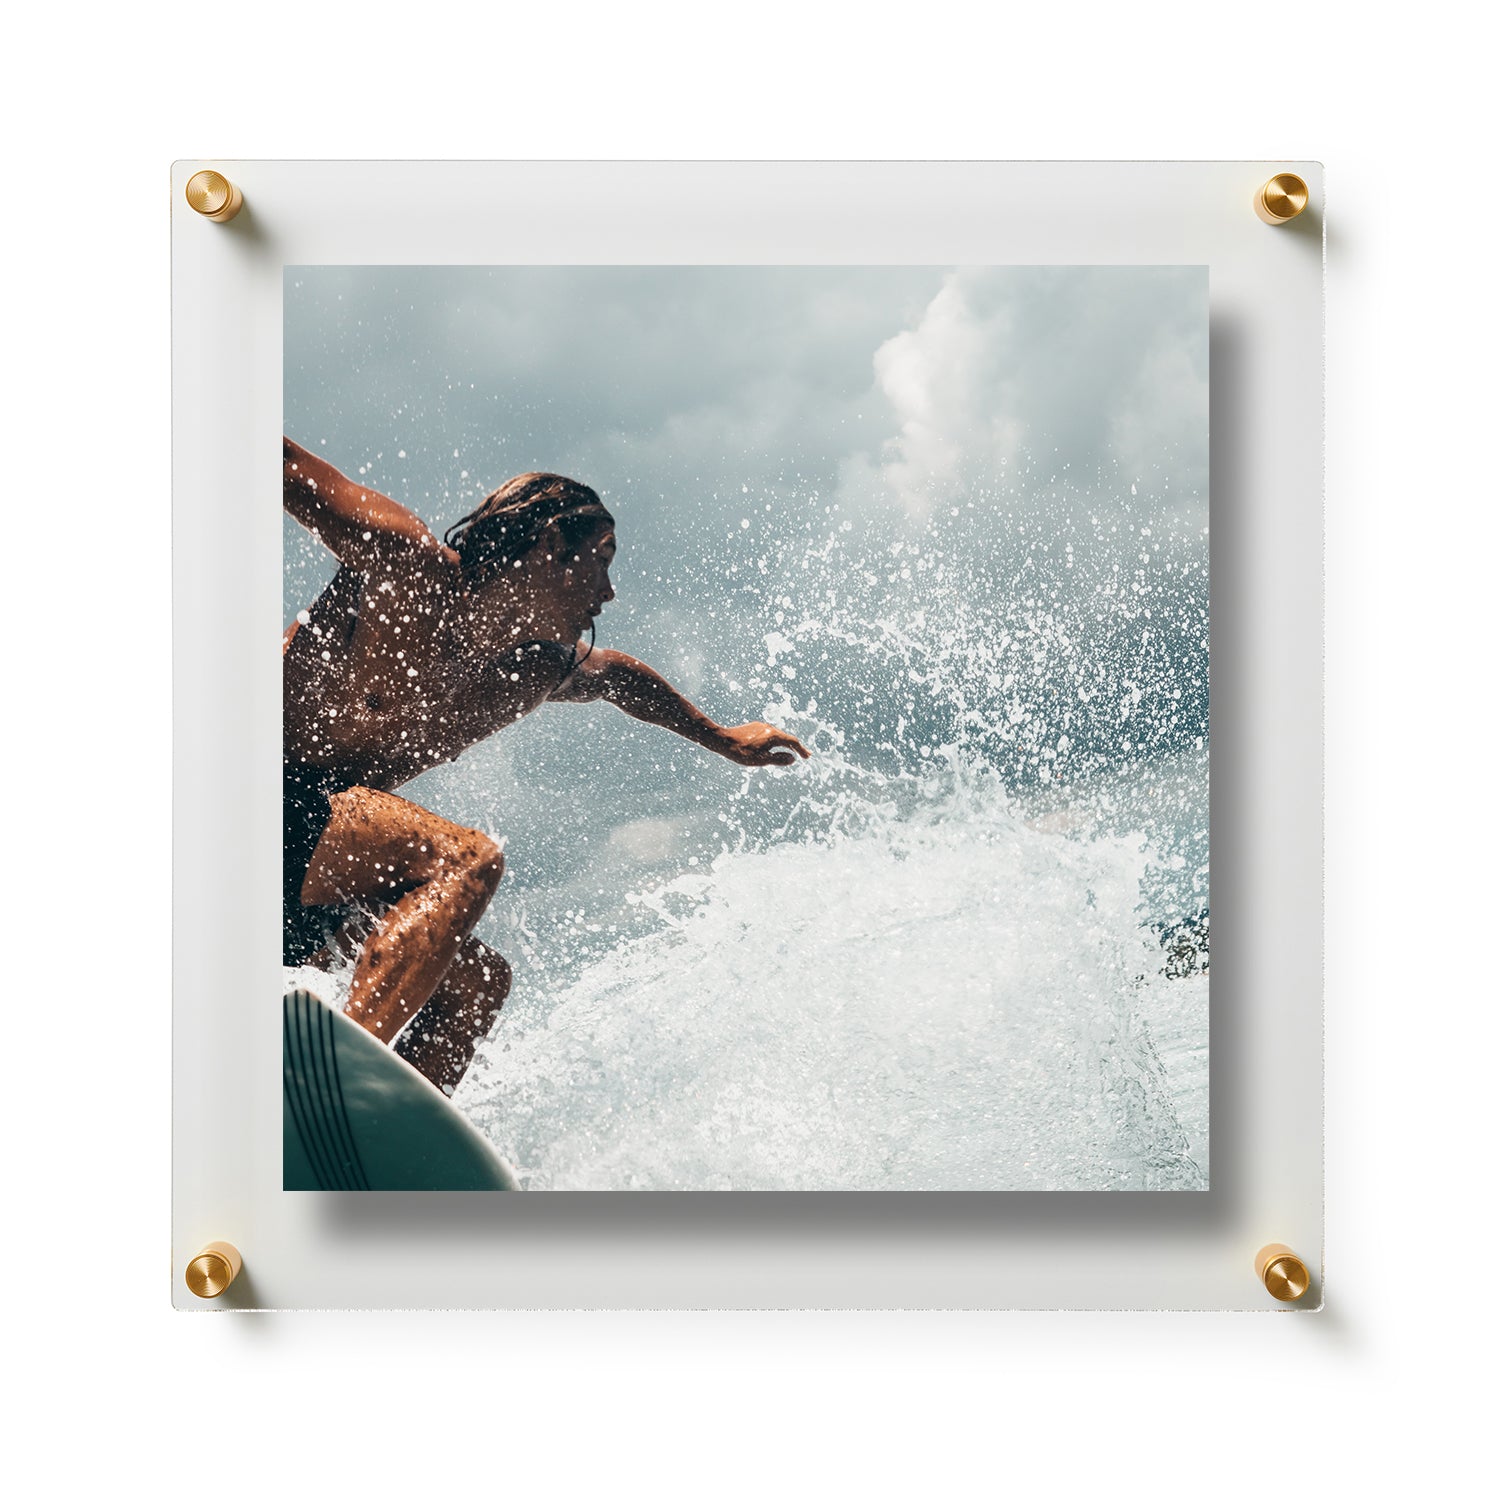 Wexel Art 15x18 Double Panel Floating Acrylic Frame for 11x14 Photo